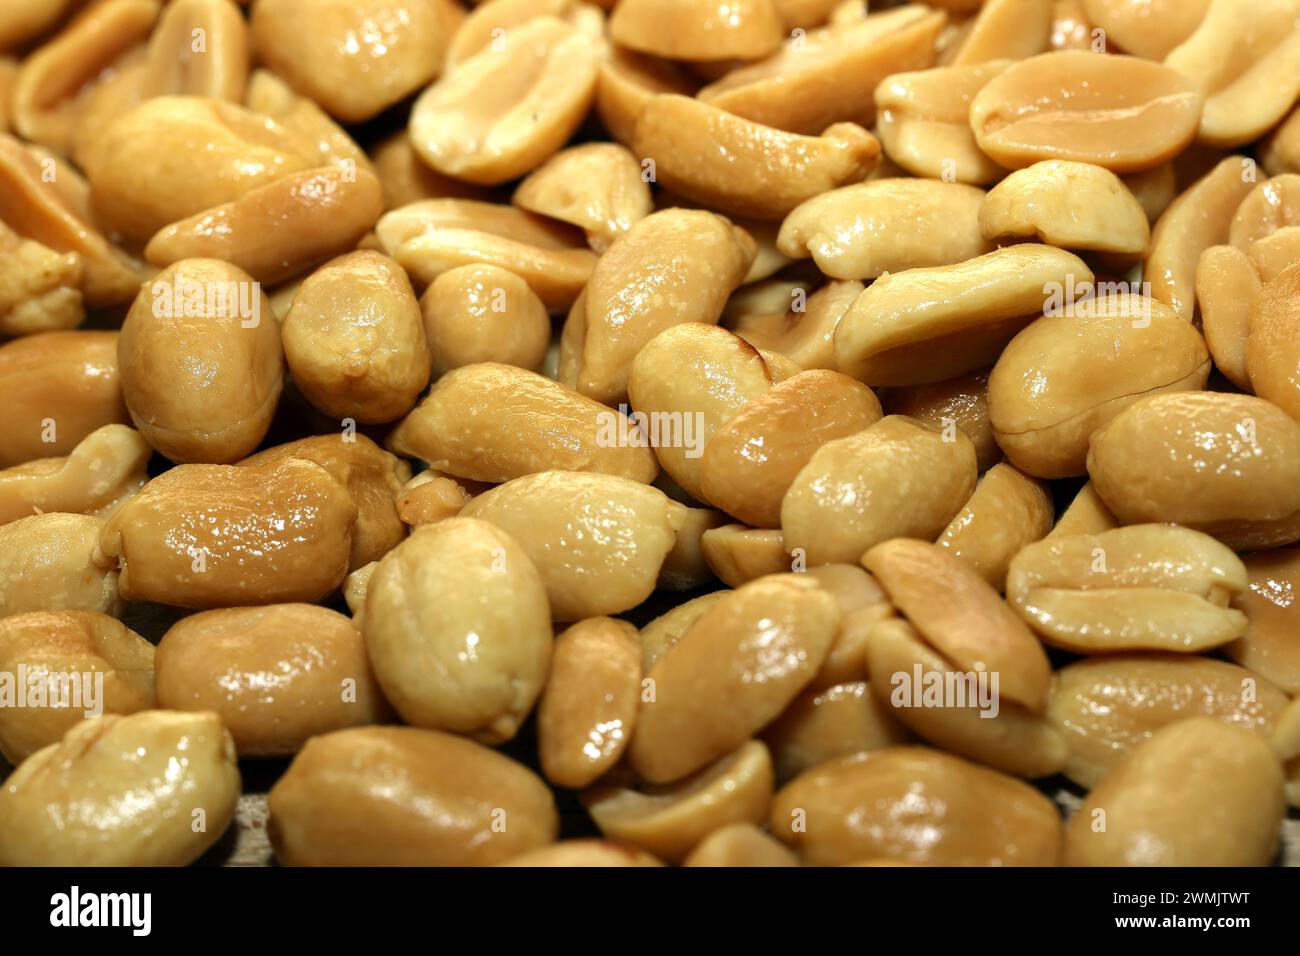 Erdnüsse als Snack Gesalzene und geröstete Erdnüsse mit hohem Fettgehalt als Snack *** Peanuts as a snack Salted and roasted peanuts with a high fat content as a snack Stock Photo